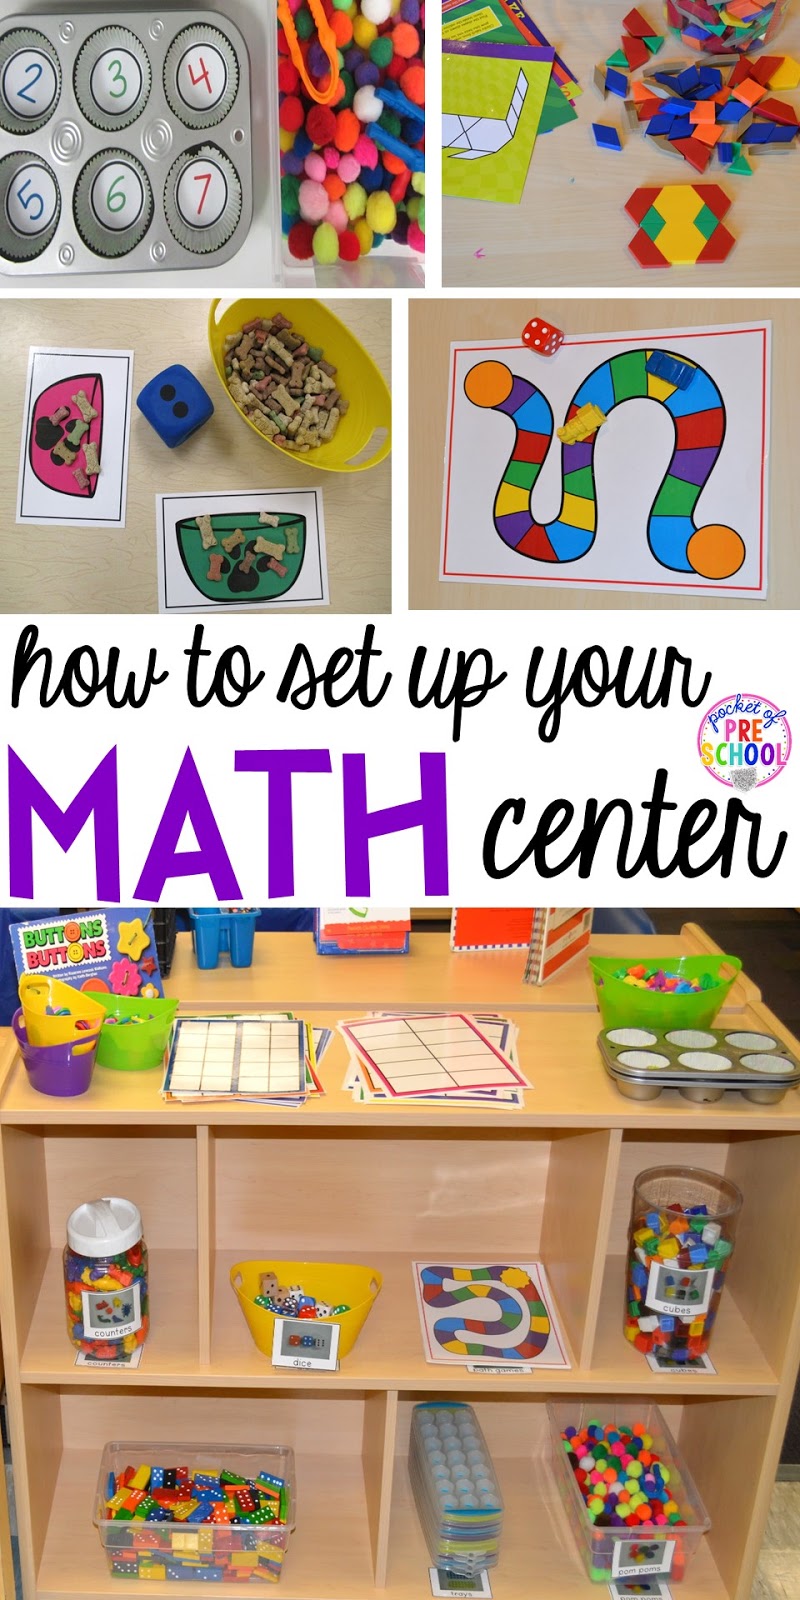 Teacher Made Math Center Learning Resource Game Shapes Match-Up 